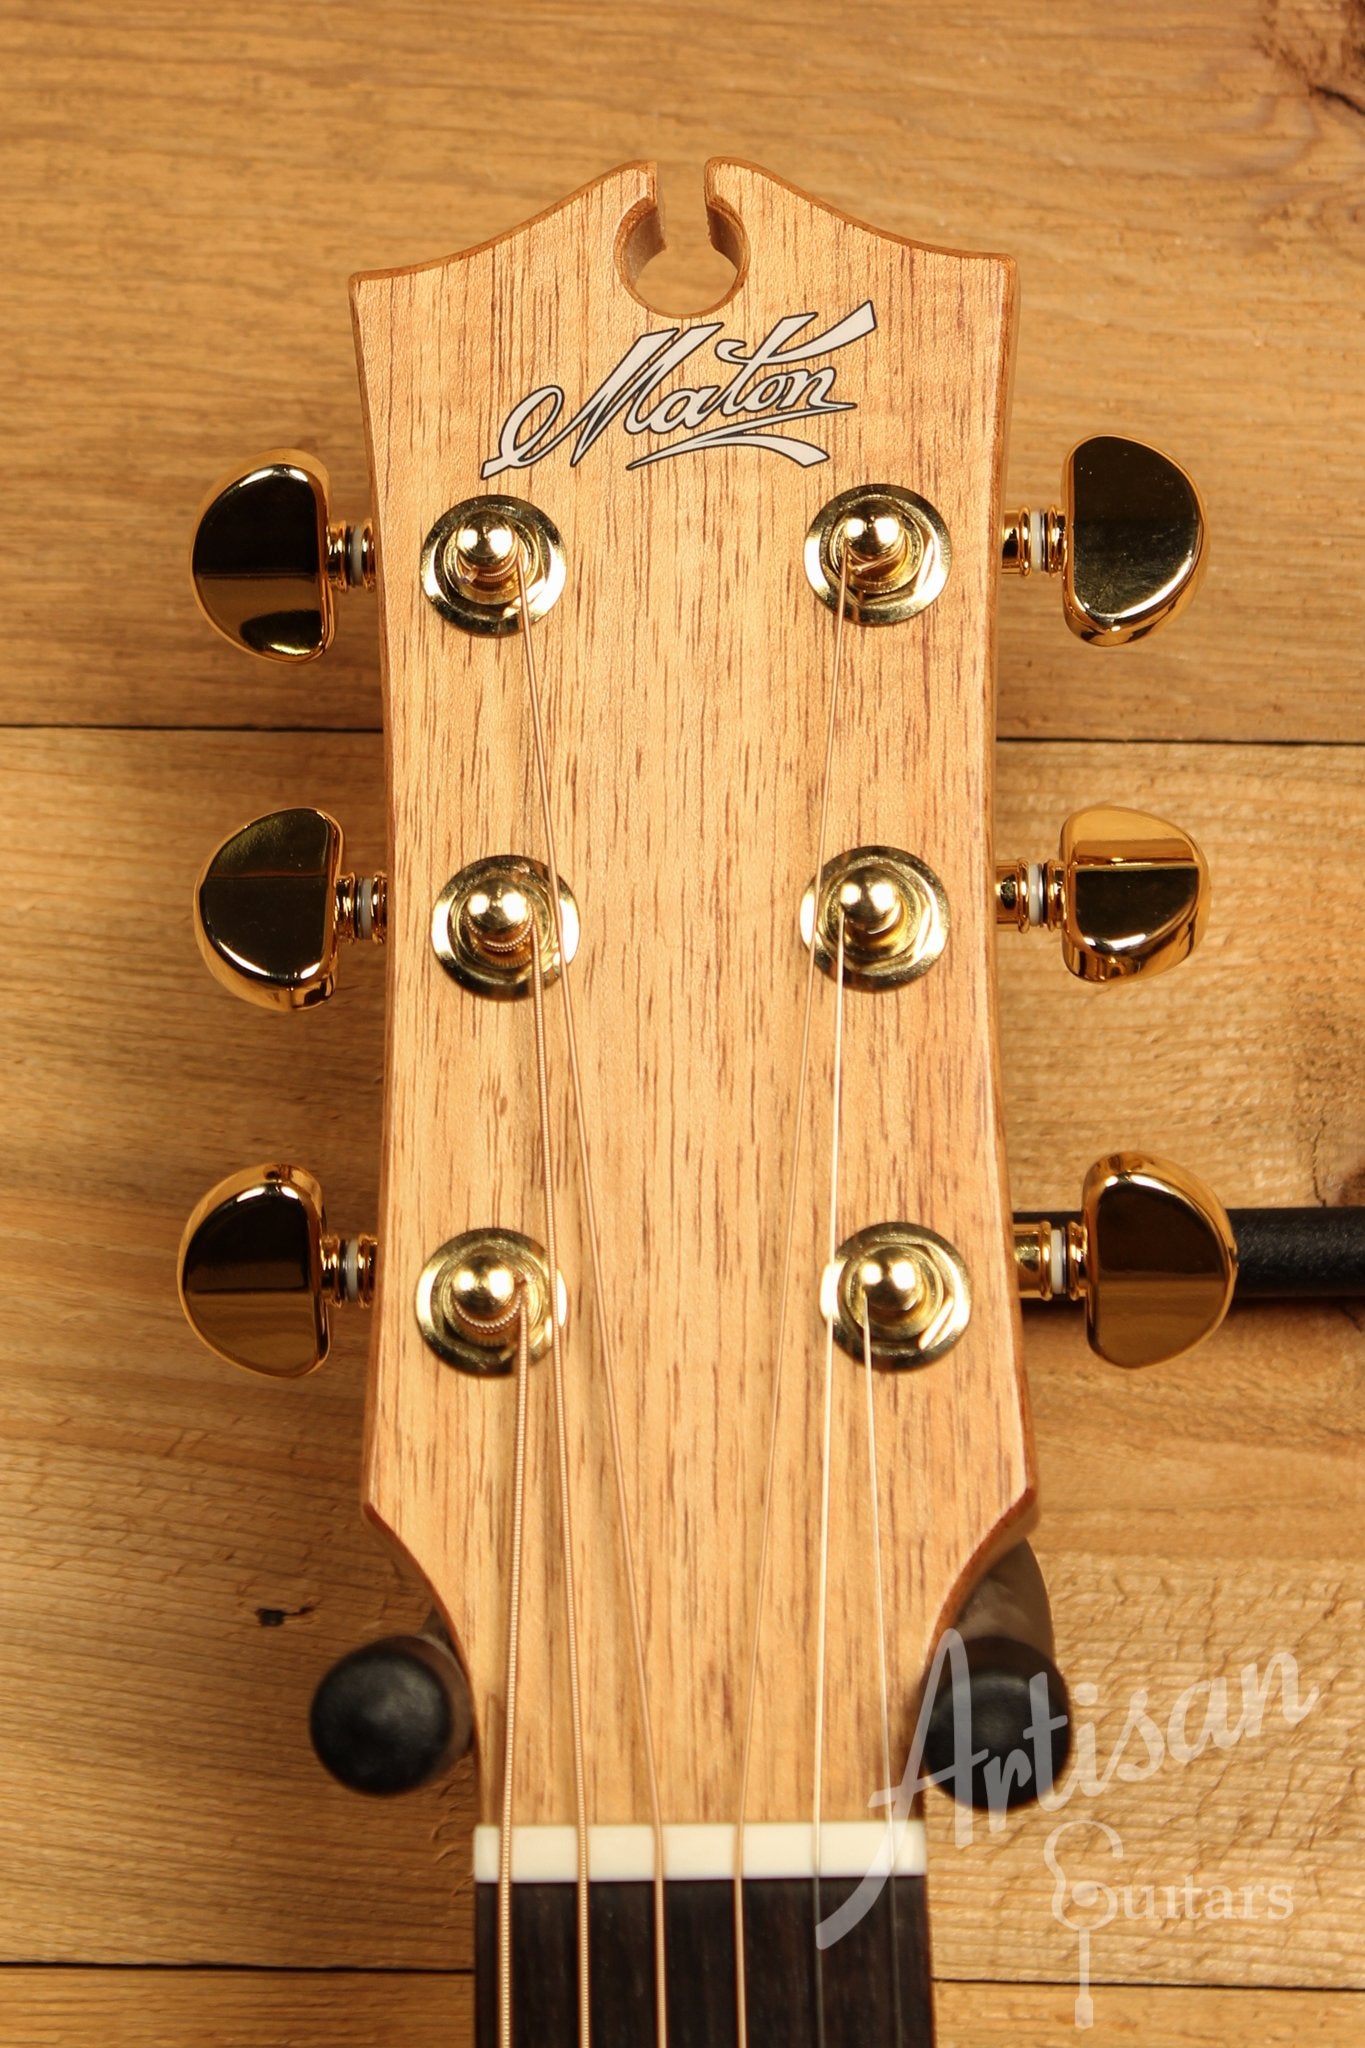 Maton EBG808 Artist Series Sitka Spruce and Blackwood ID-11552 - Artisan Guitars